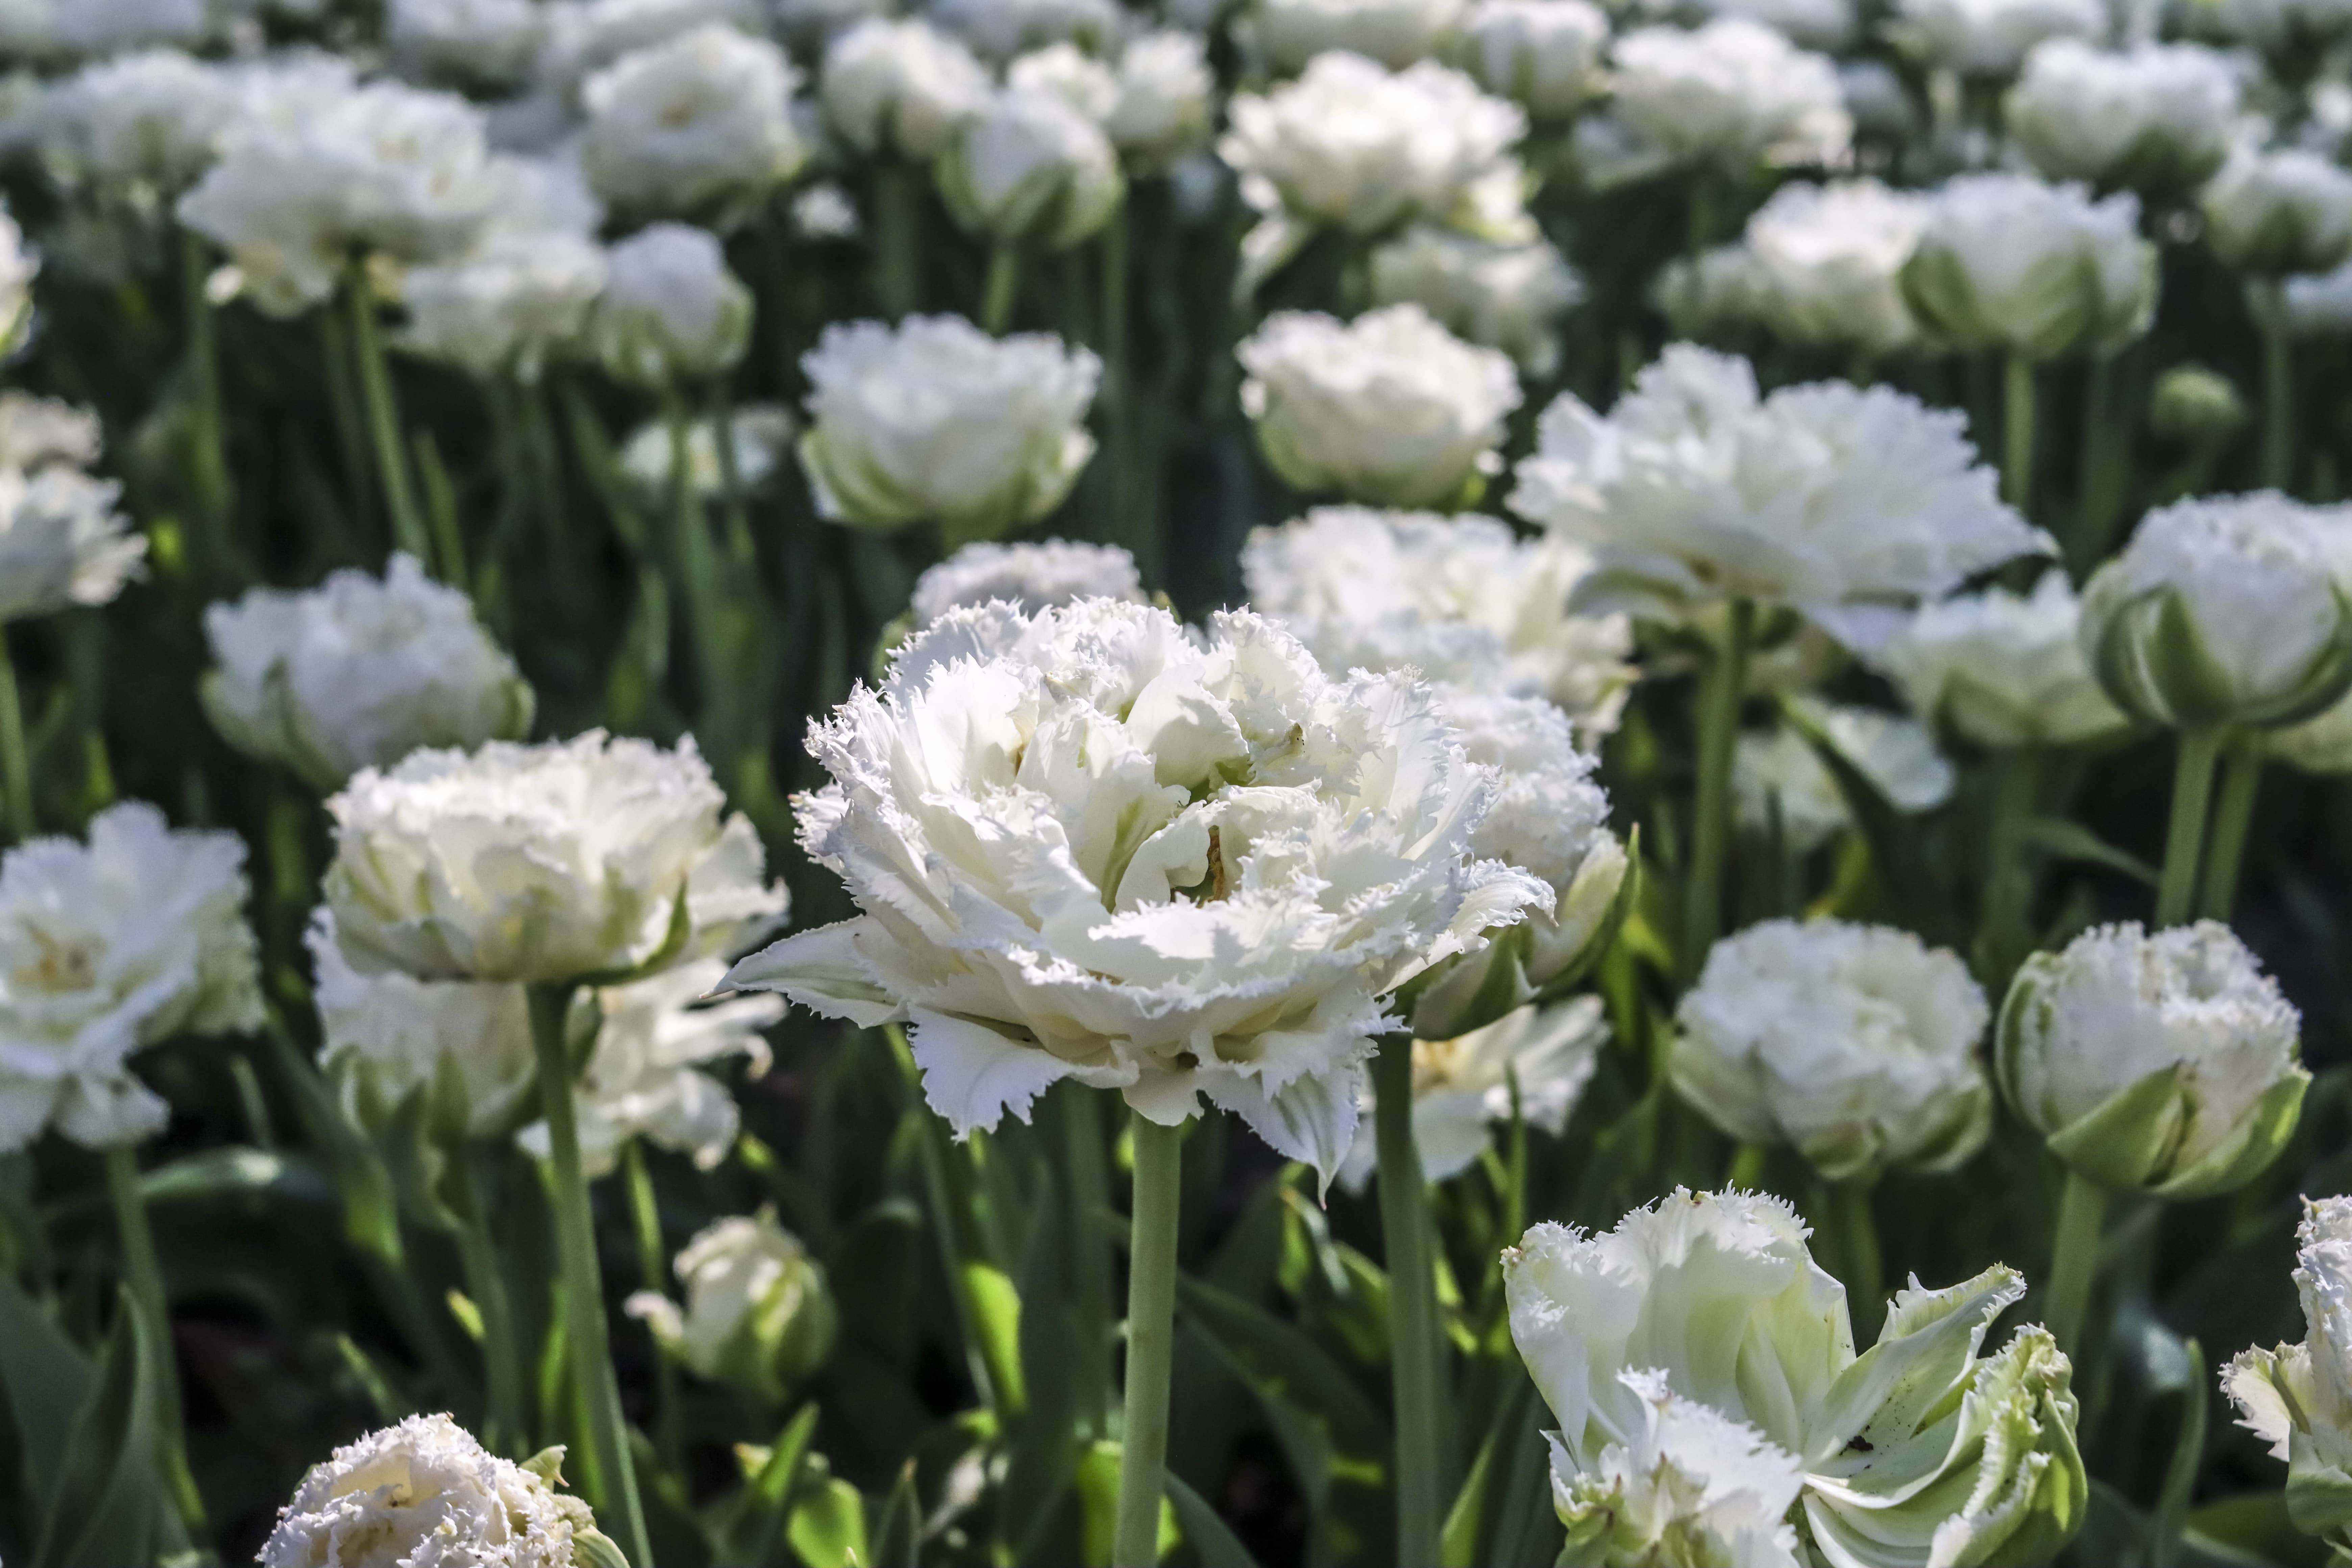 white-tulips